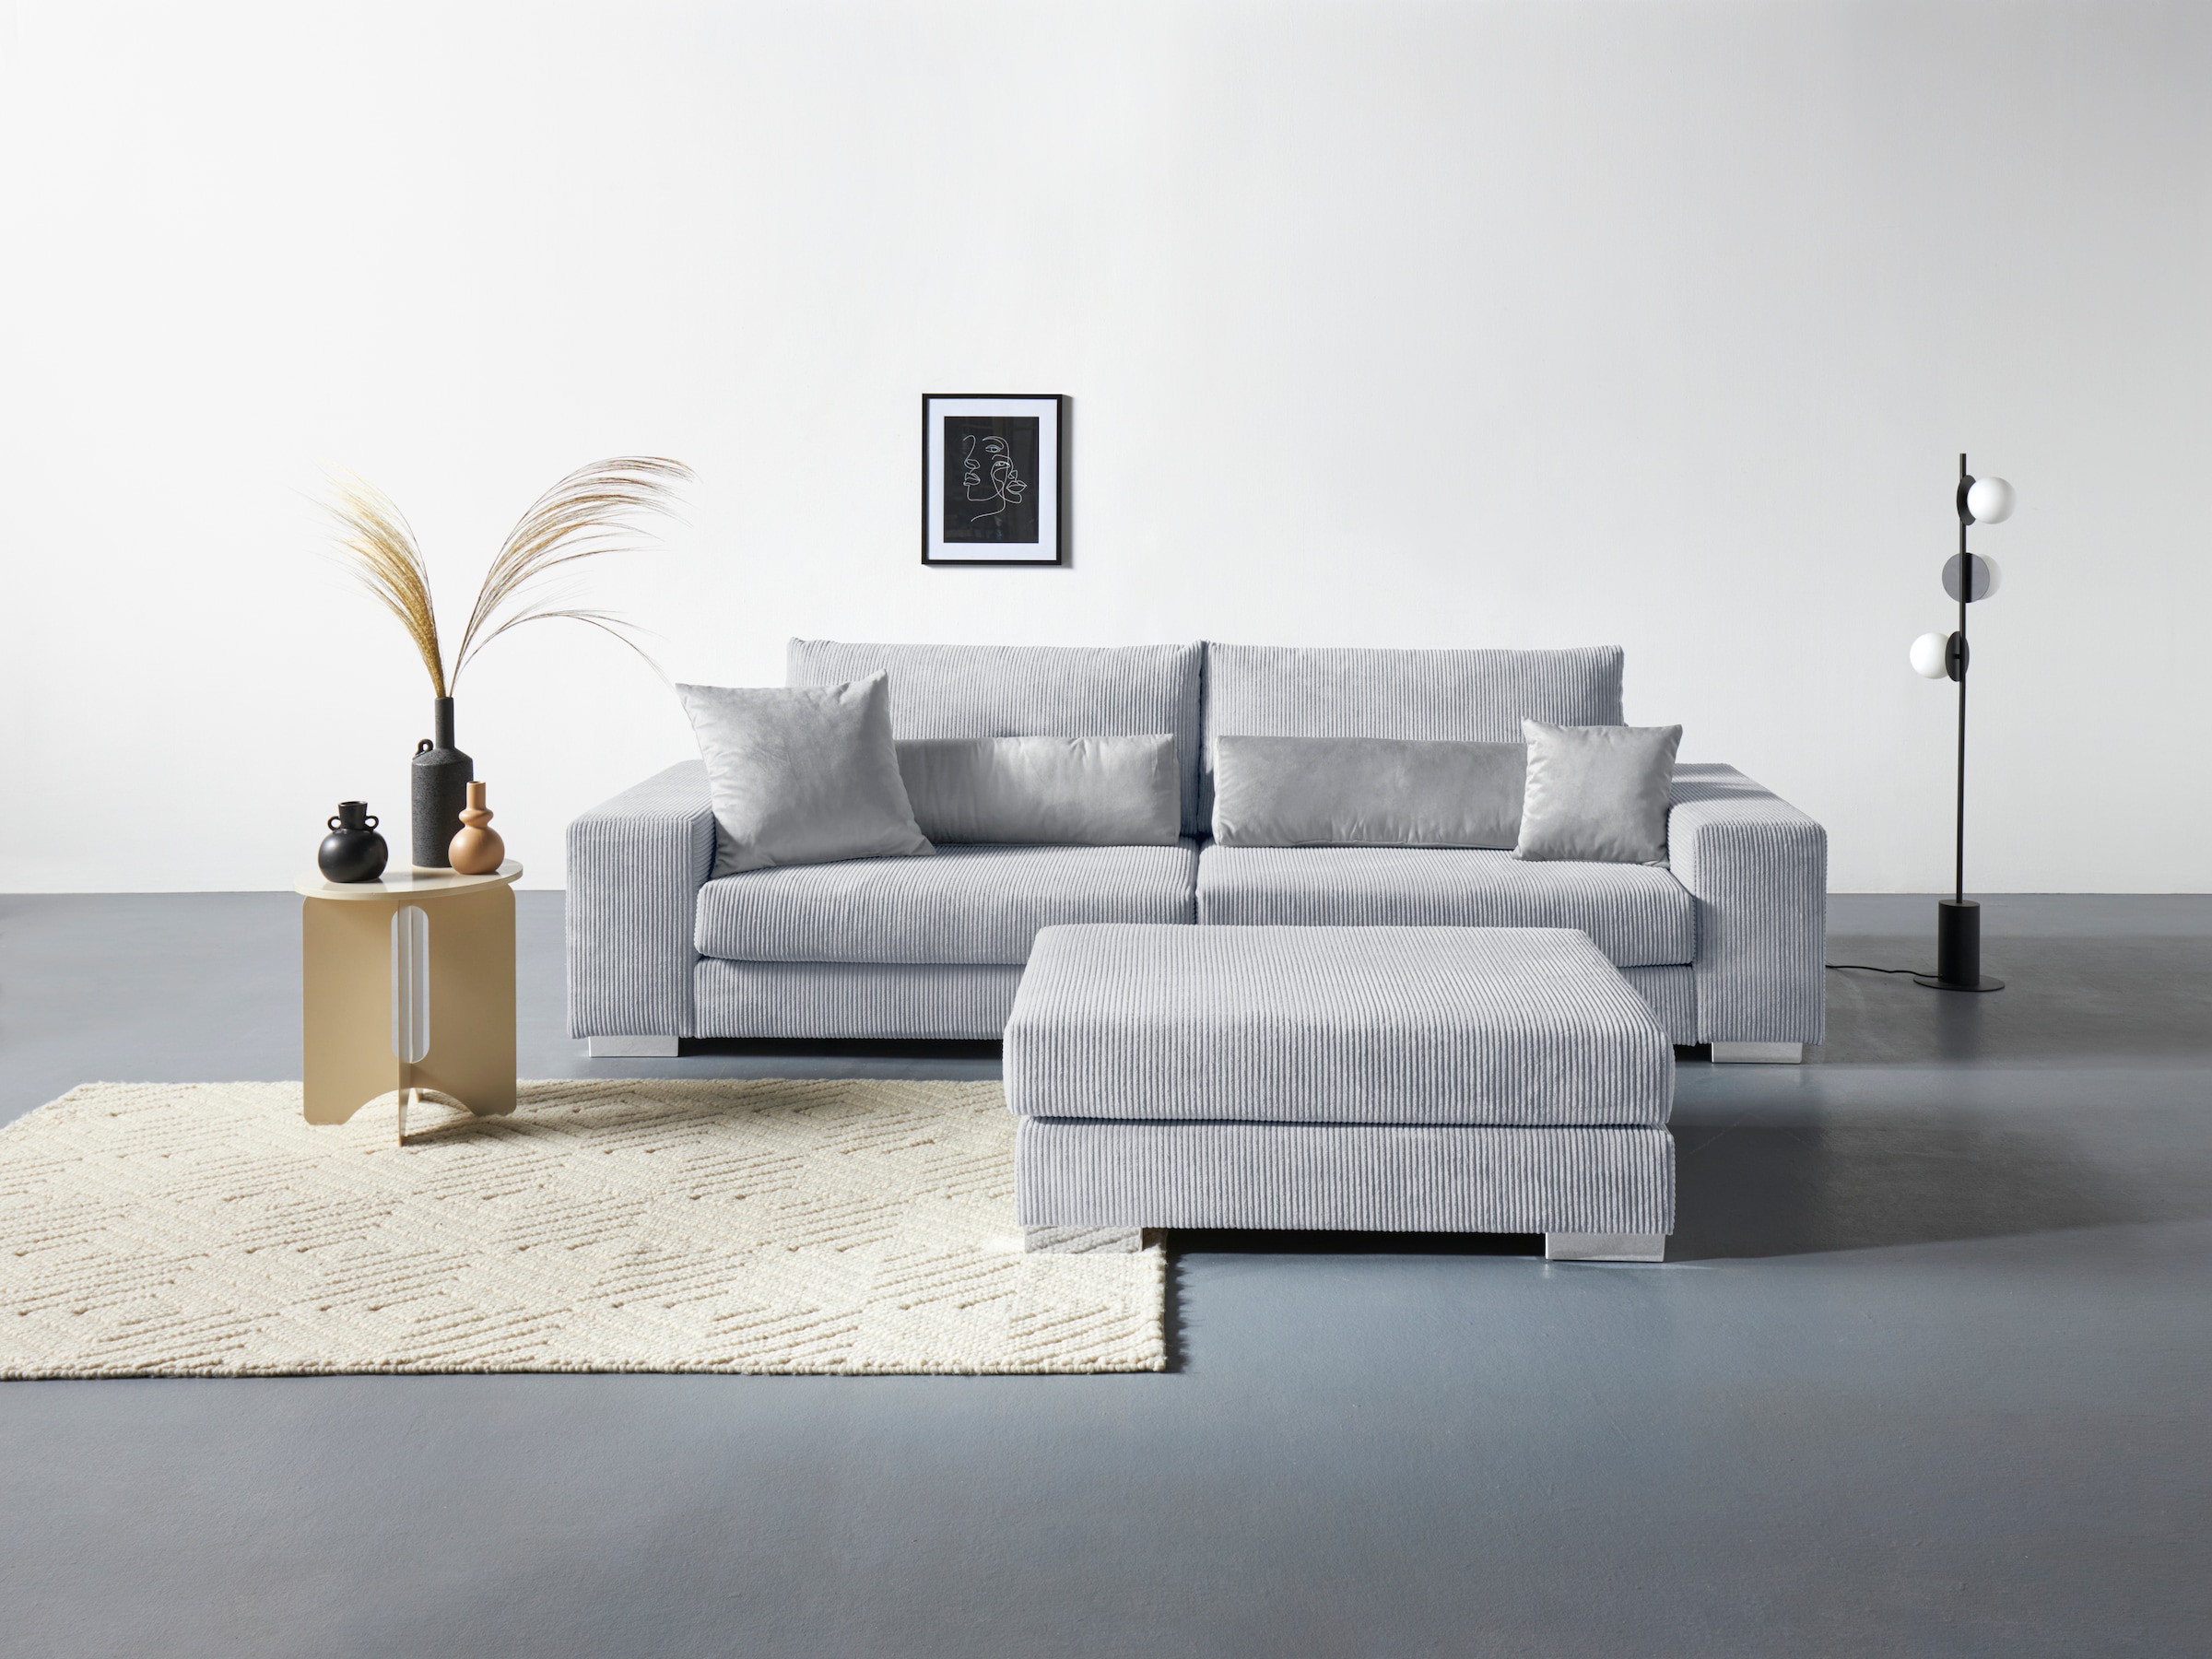 Home affaire Big-Sofa »Vasco«, Breite 277 cm, inkl. 6-teiliges Kissenset,  in Cord online kaufen